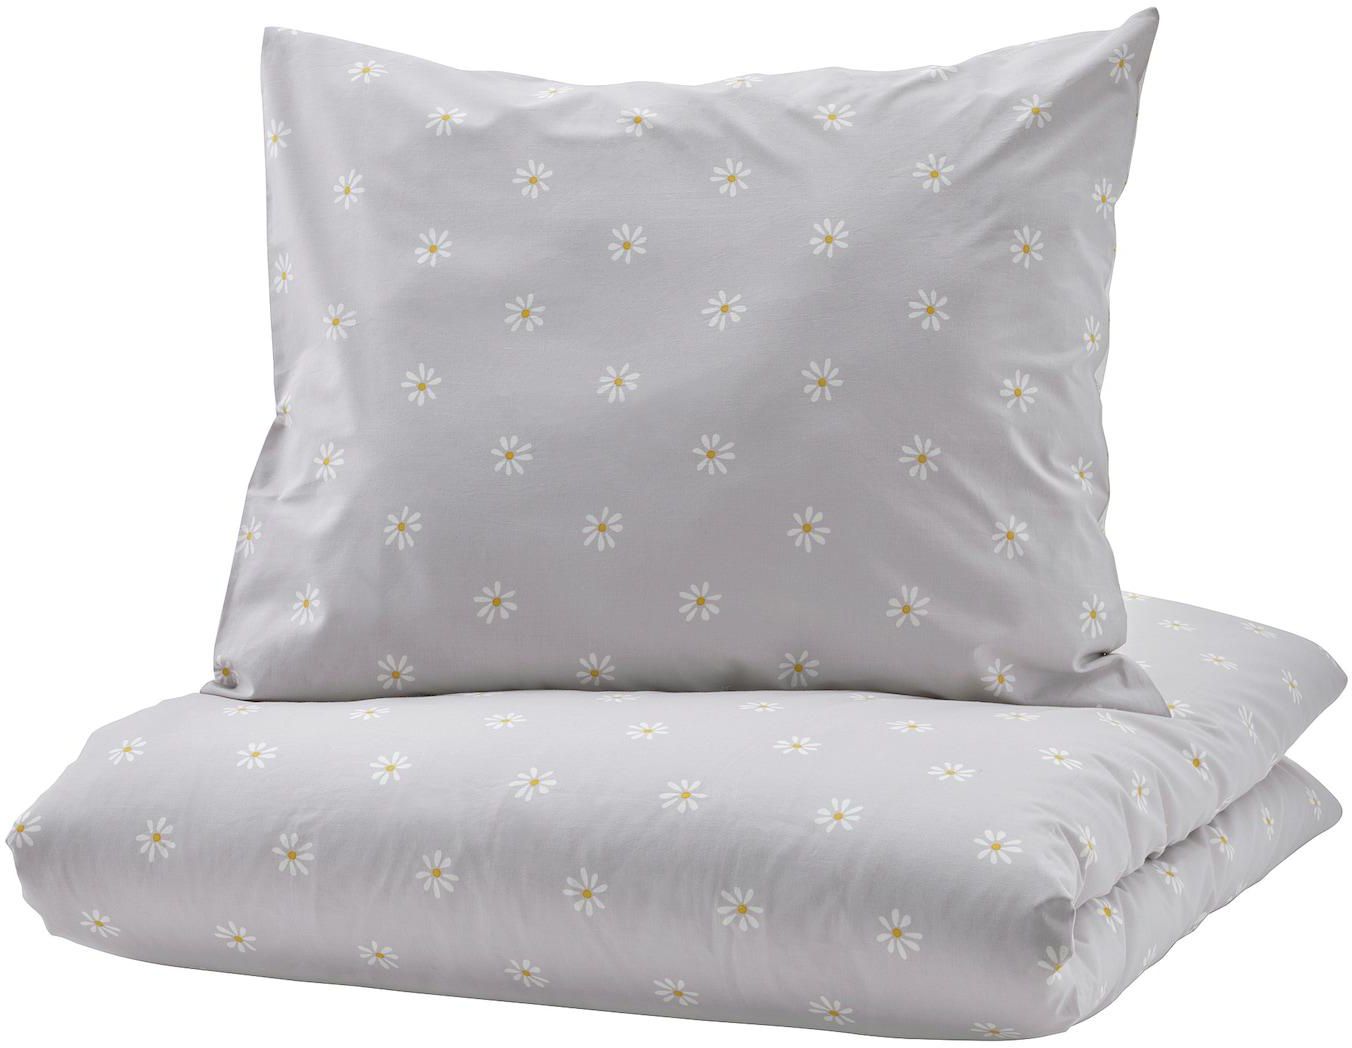 NATTSLÄNDA Duvet cover and pillowcase - floral pattern grey/white 150x200/50x80 cm